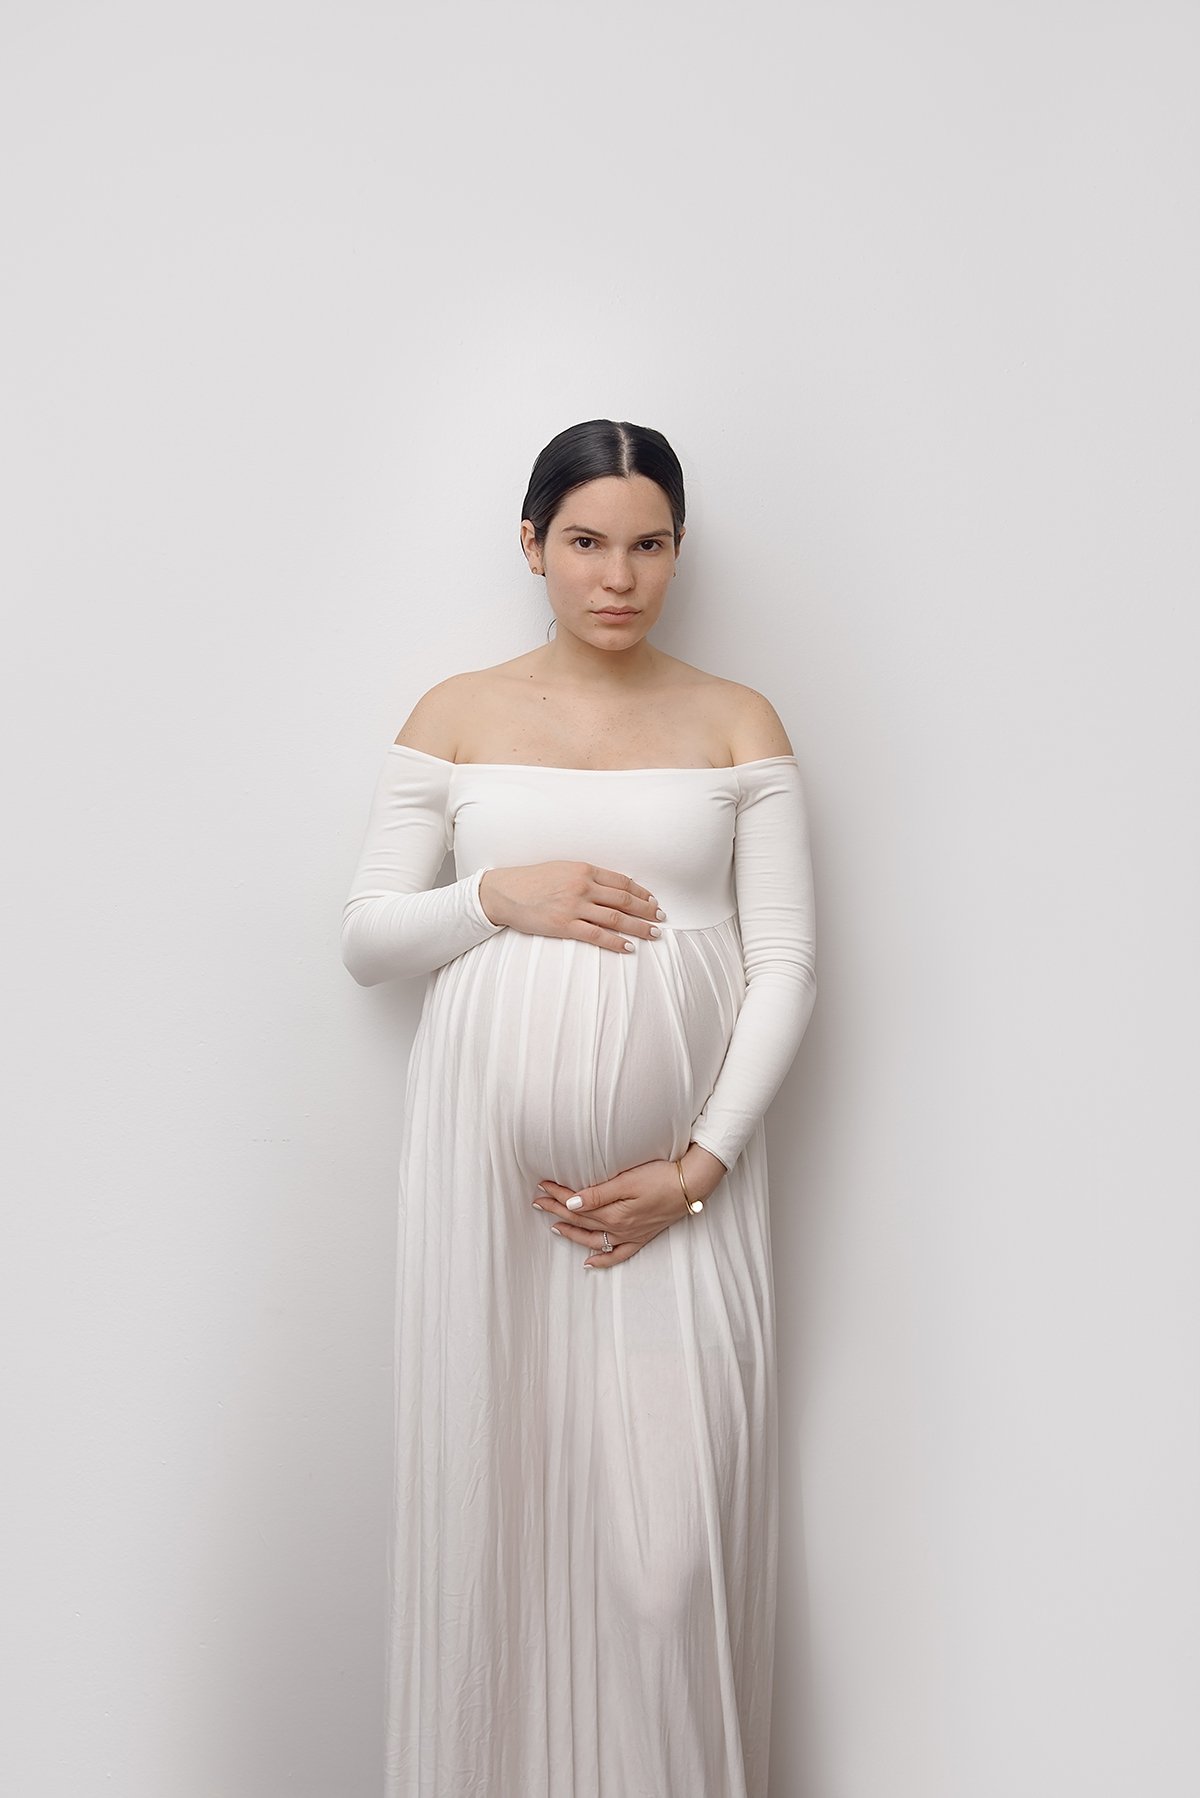 maternity-pregnancy-photographer-san-juan-puerto-rico--white-dress-gown-long-sleeve-fotografa-maternidad-embarazo-10.jpg